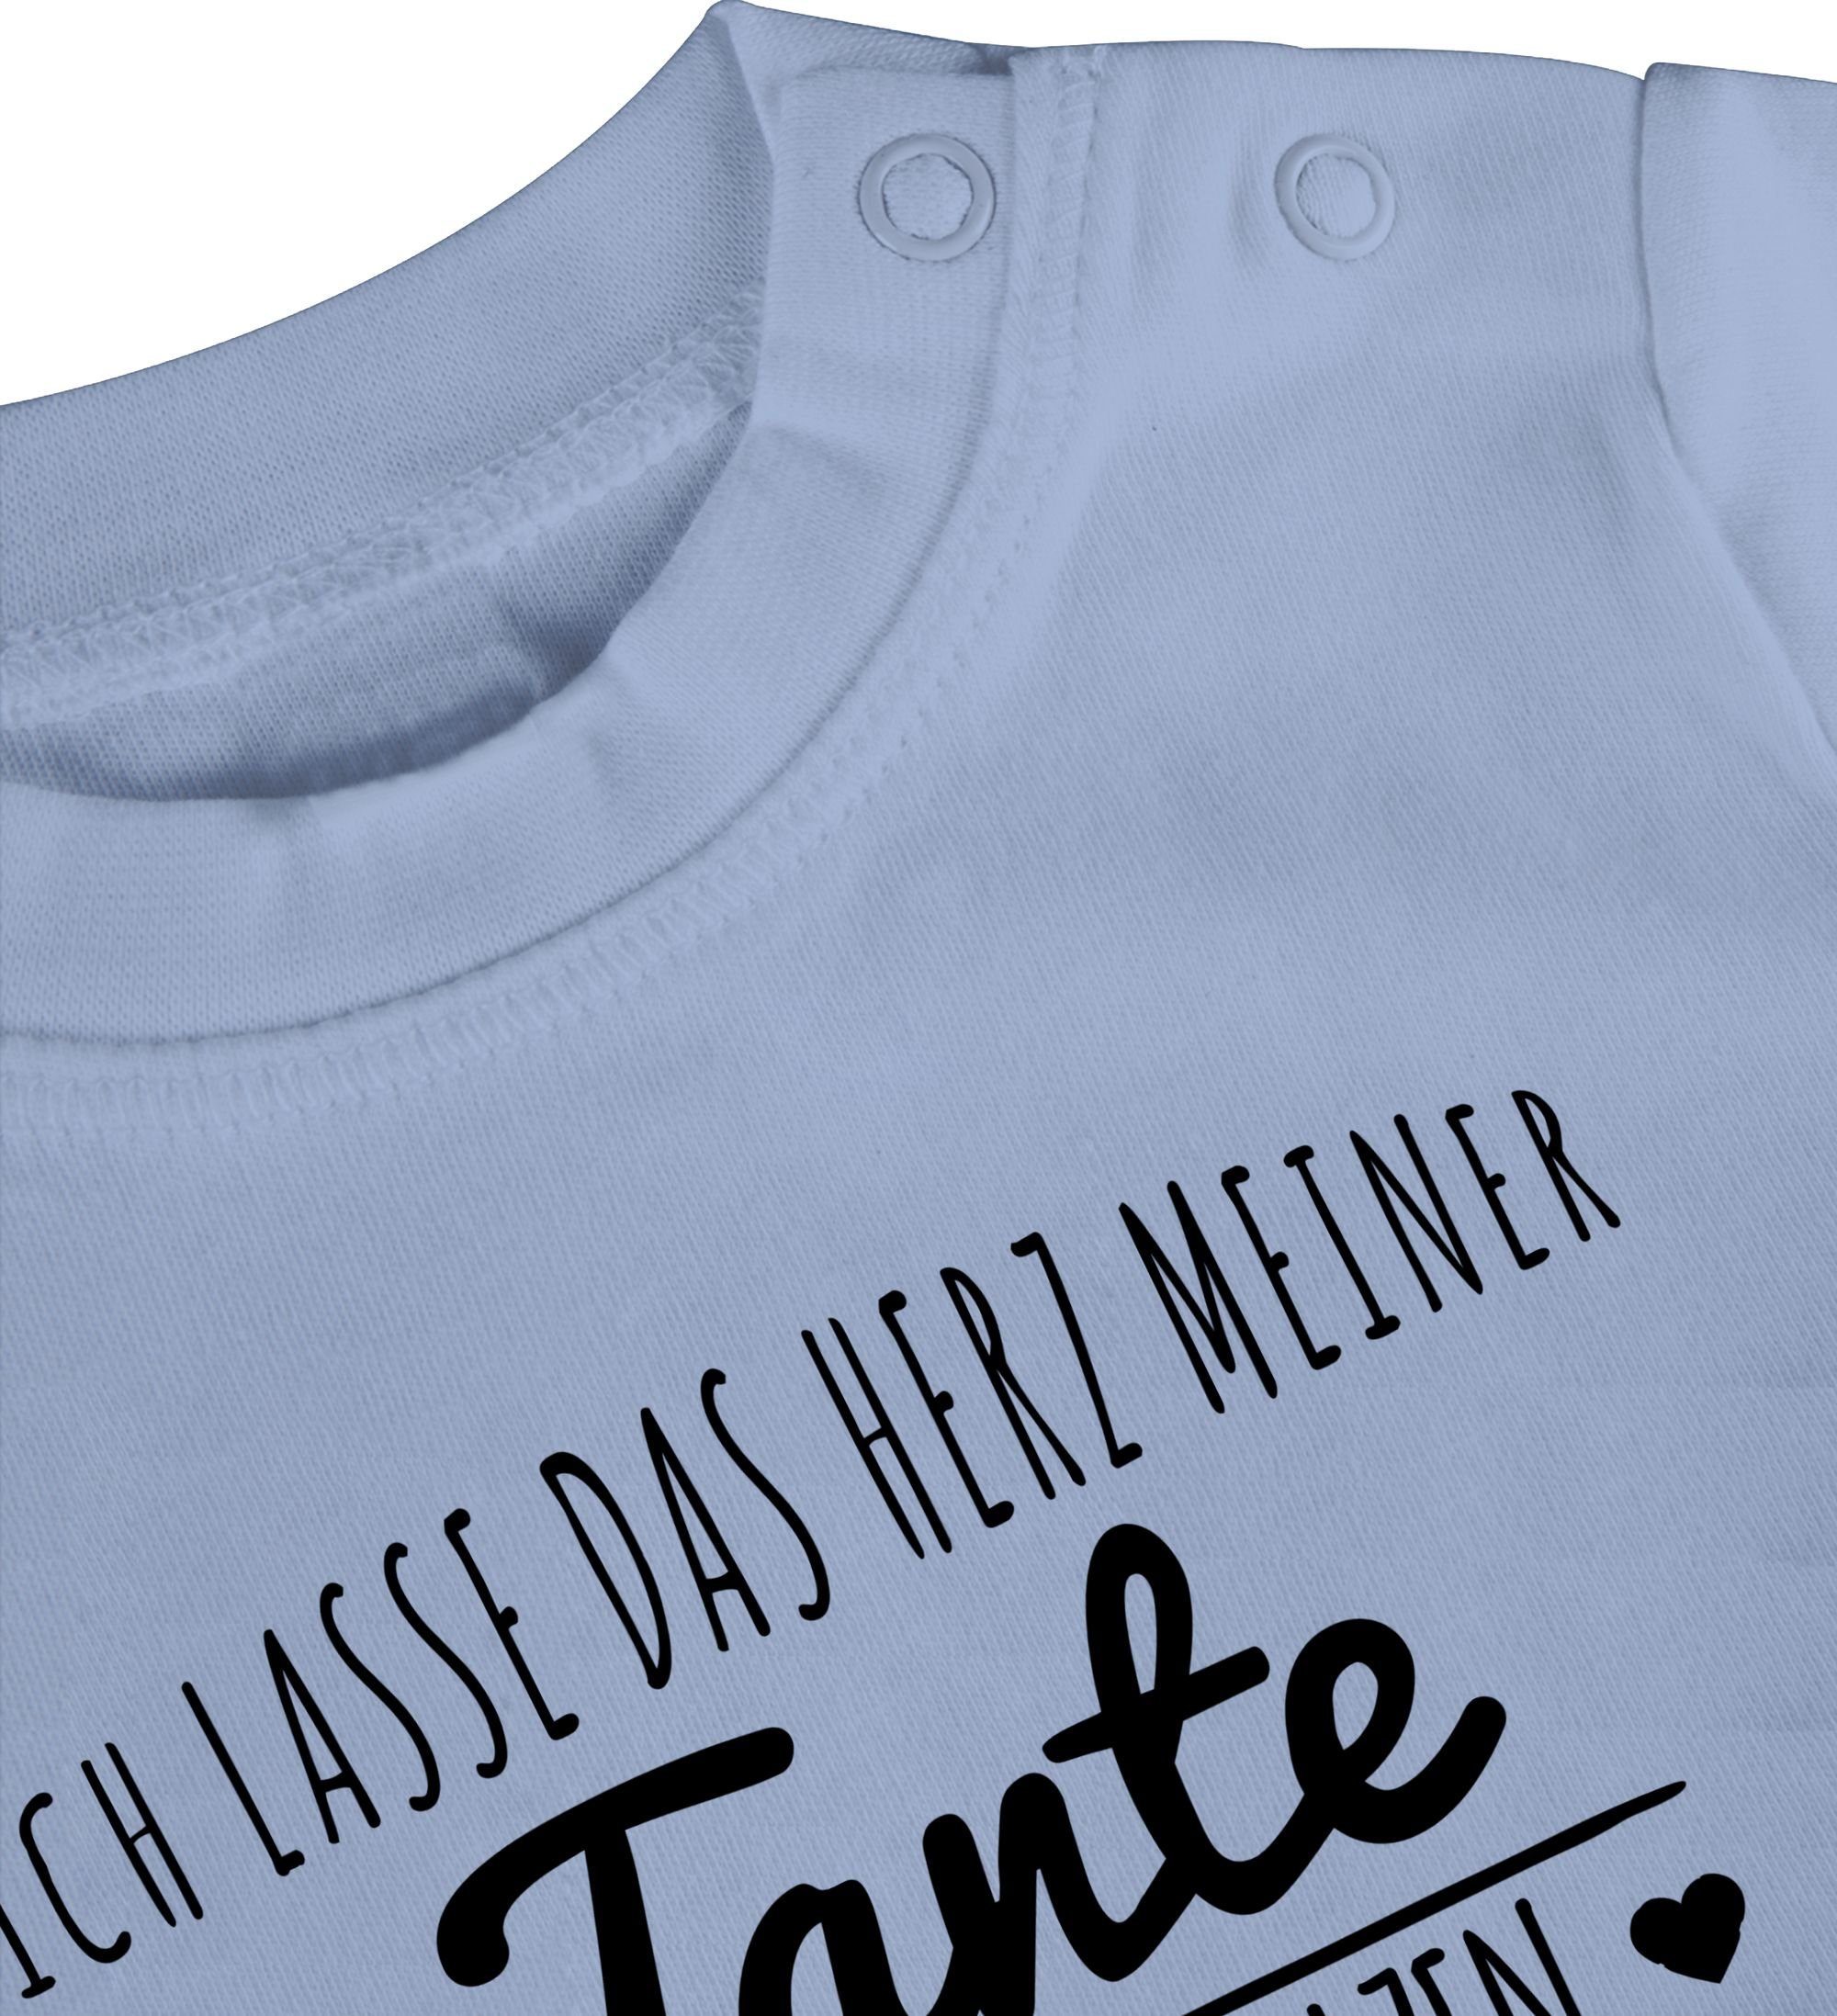 Herz Tante Babyblau dahinschmelzen Shirtracer Tante T-Shirt 3